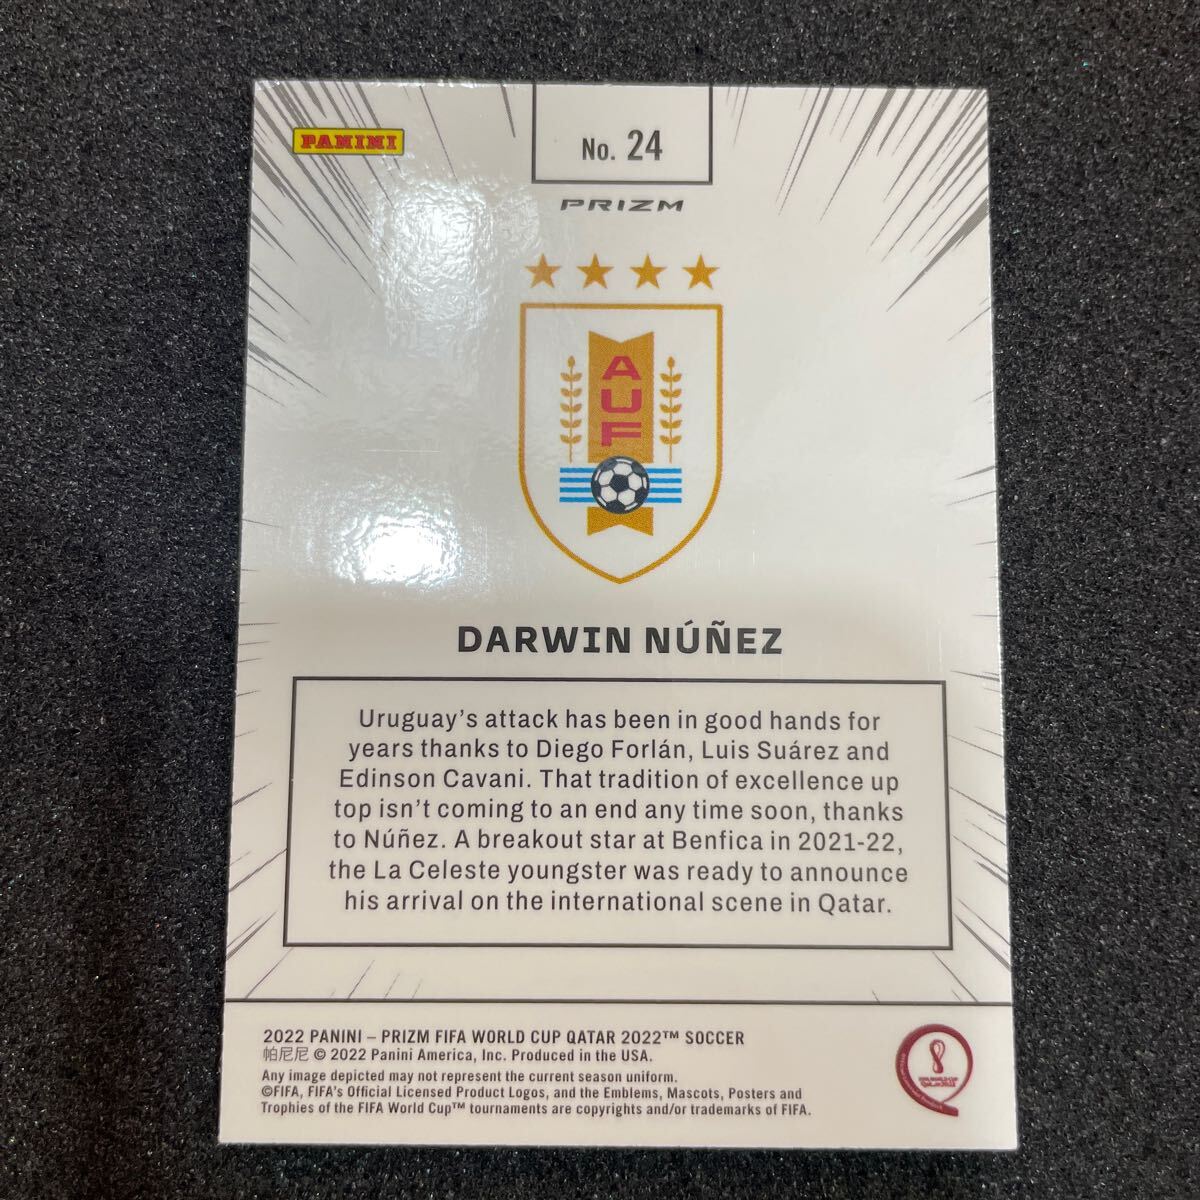 panini prizm fifa world cup qatar 2022 soccer DARWIN NUNEZ manga liverpool_画像3